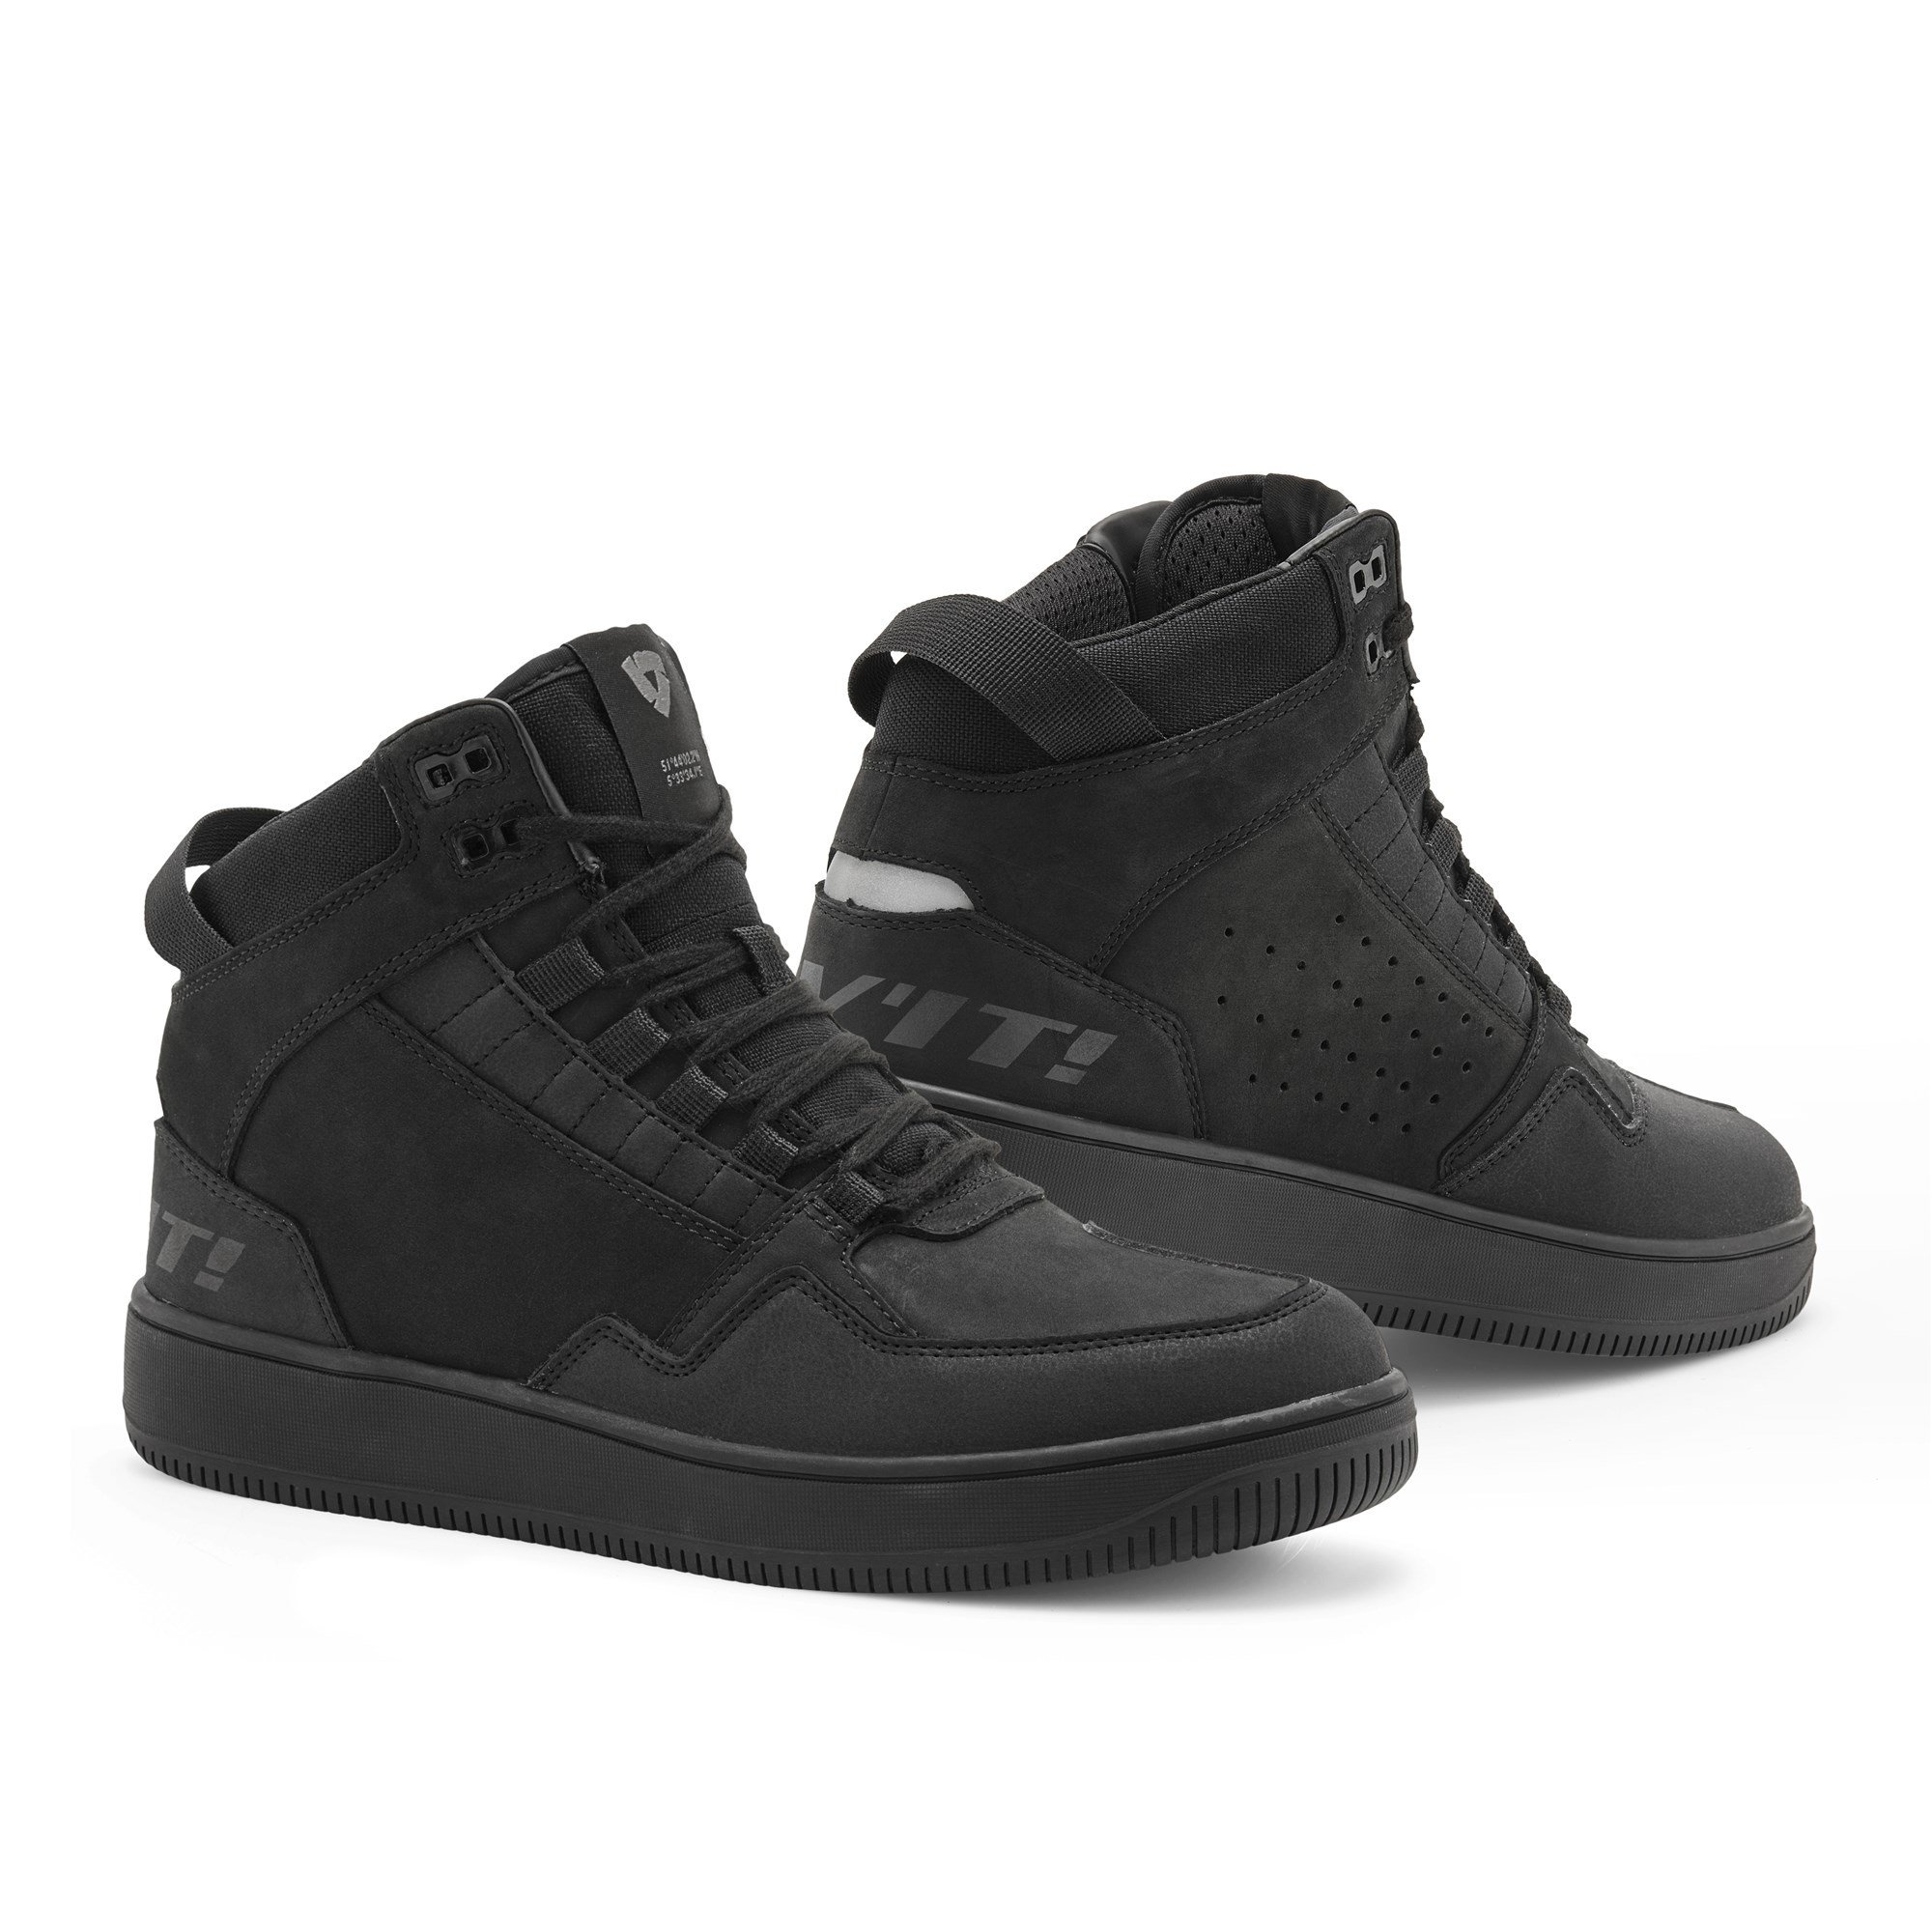 Image of REV'IT! Jefferson Shoes Black Size 43 ID 8700001282093